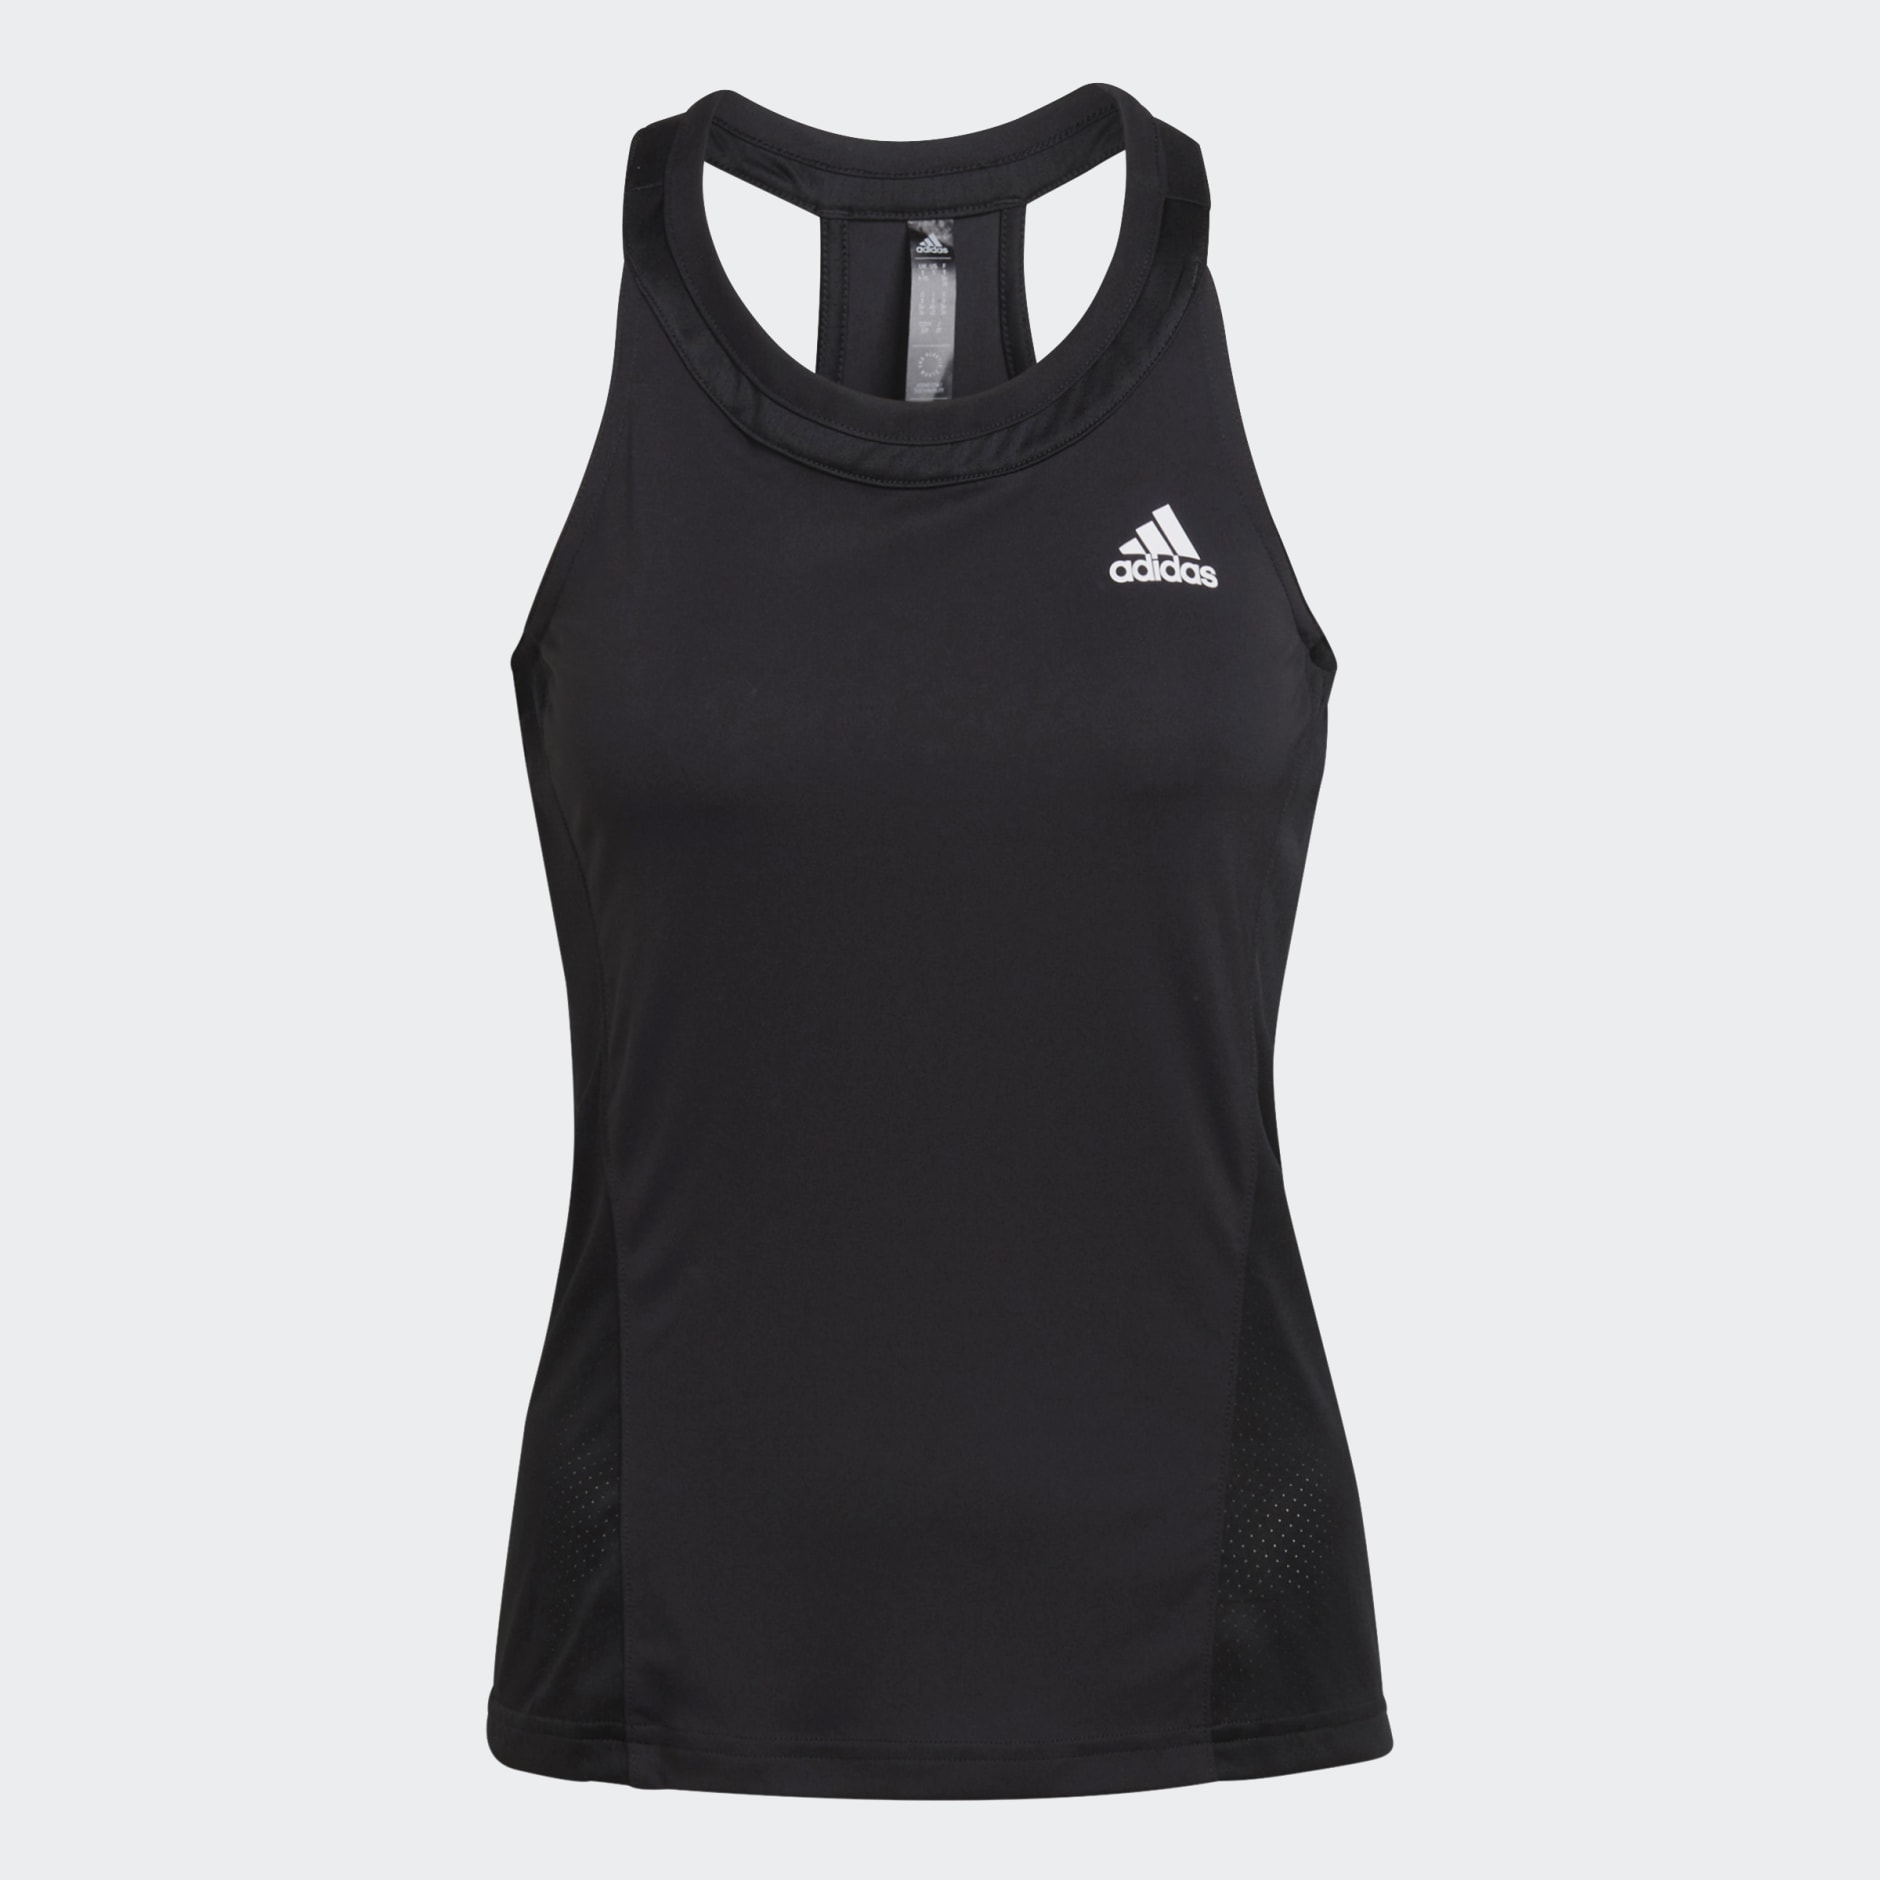 Women's Clothing - Club Tennis Tank Top - Black | adidas Egypt